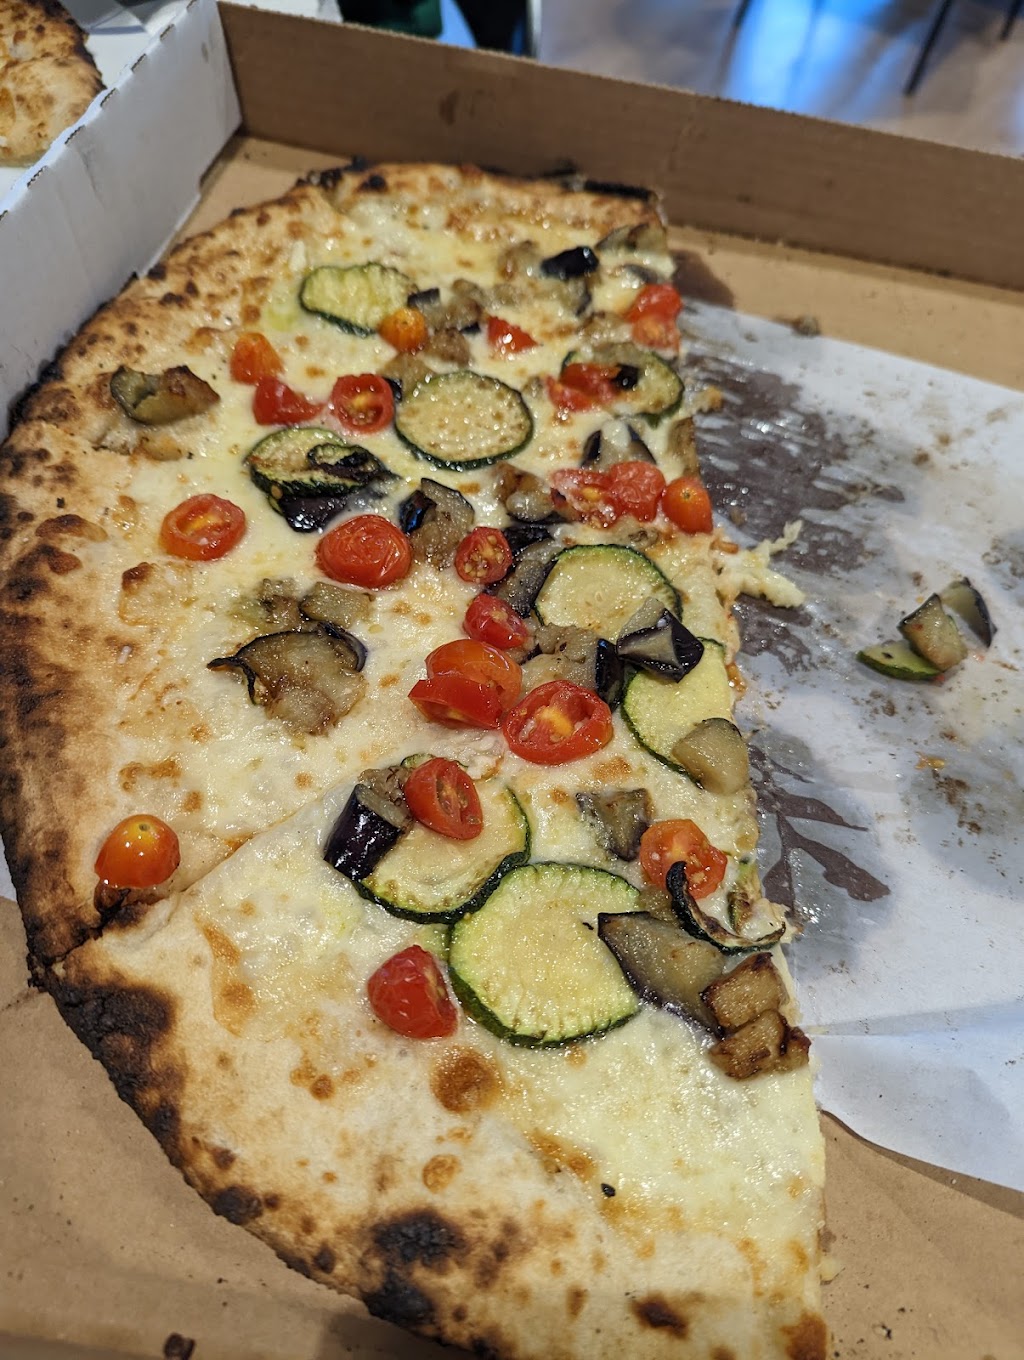 HG Coal Fired Pizza (Chesterbrook) | 500 Chesterbrook Blvd, Wayne, PA 19087 | Phone: (484) 320-8240